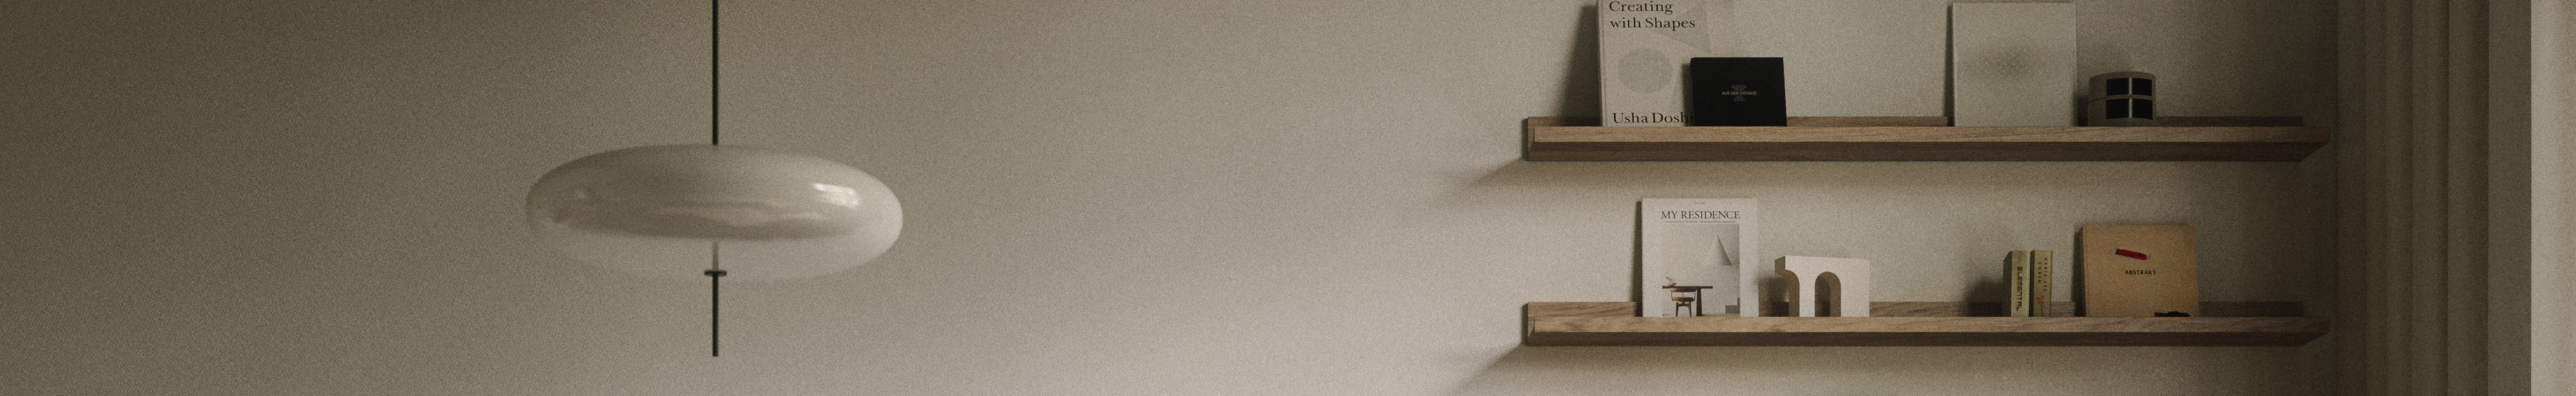 Bannière de profil de darstellungsart / Madeleine Nolle